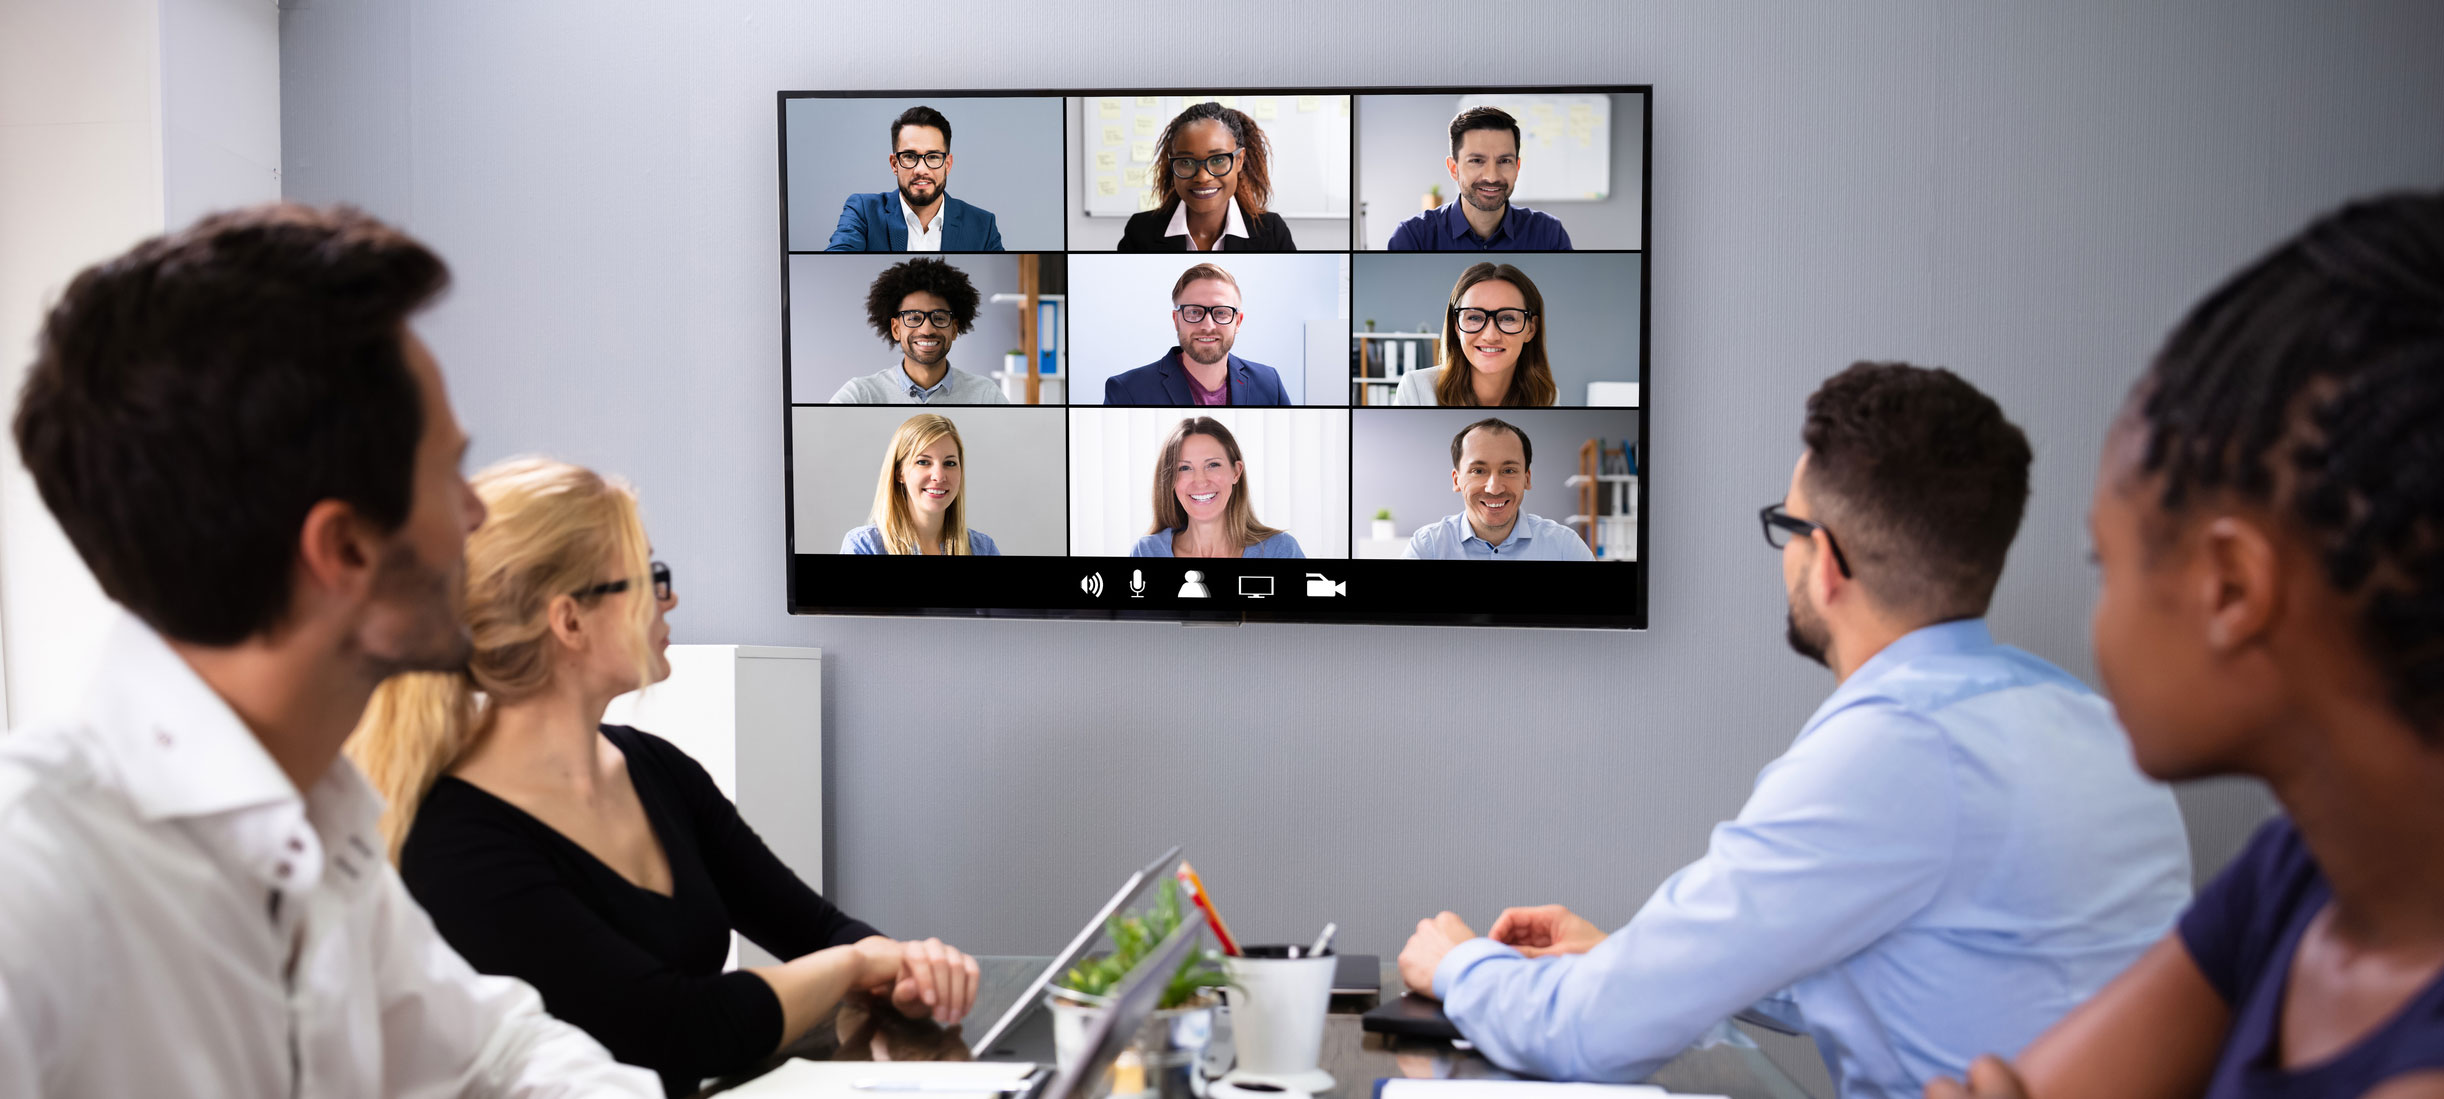 People in a virtual meeting